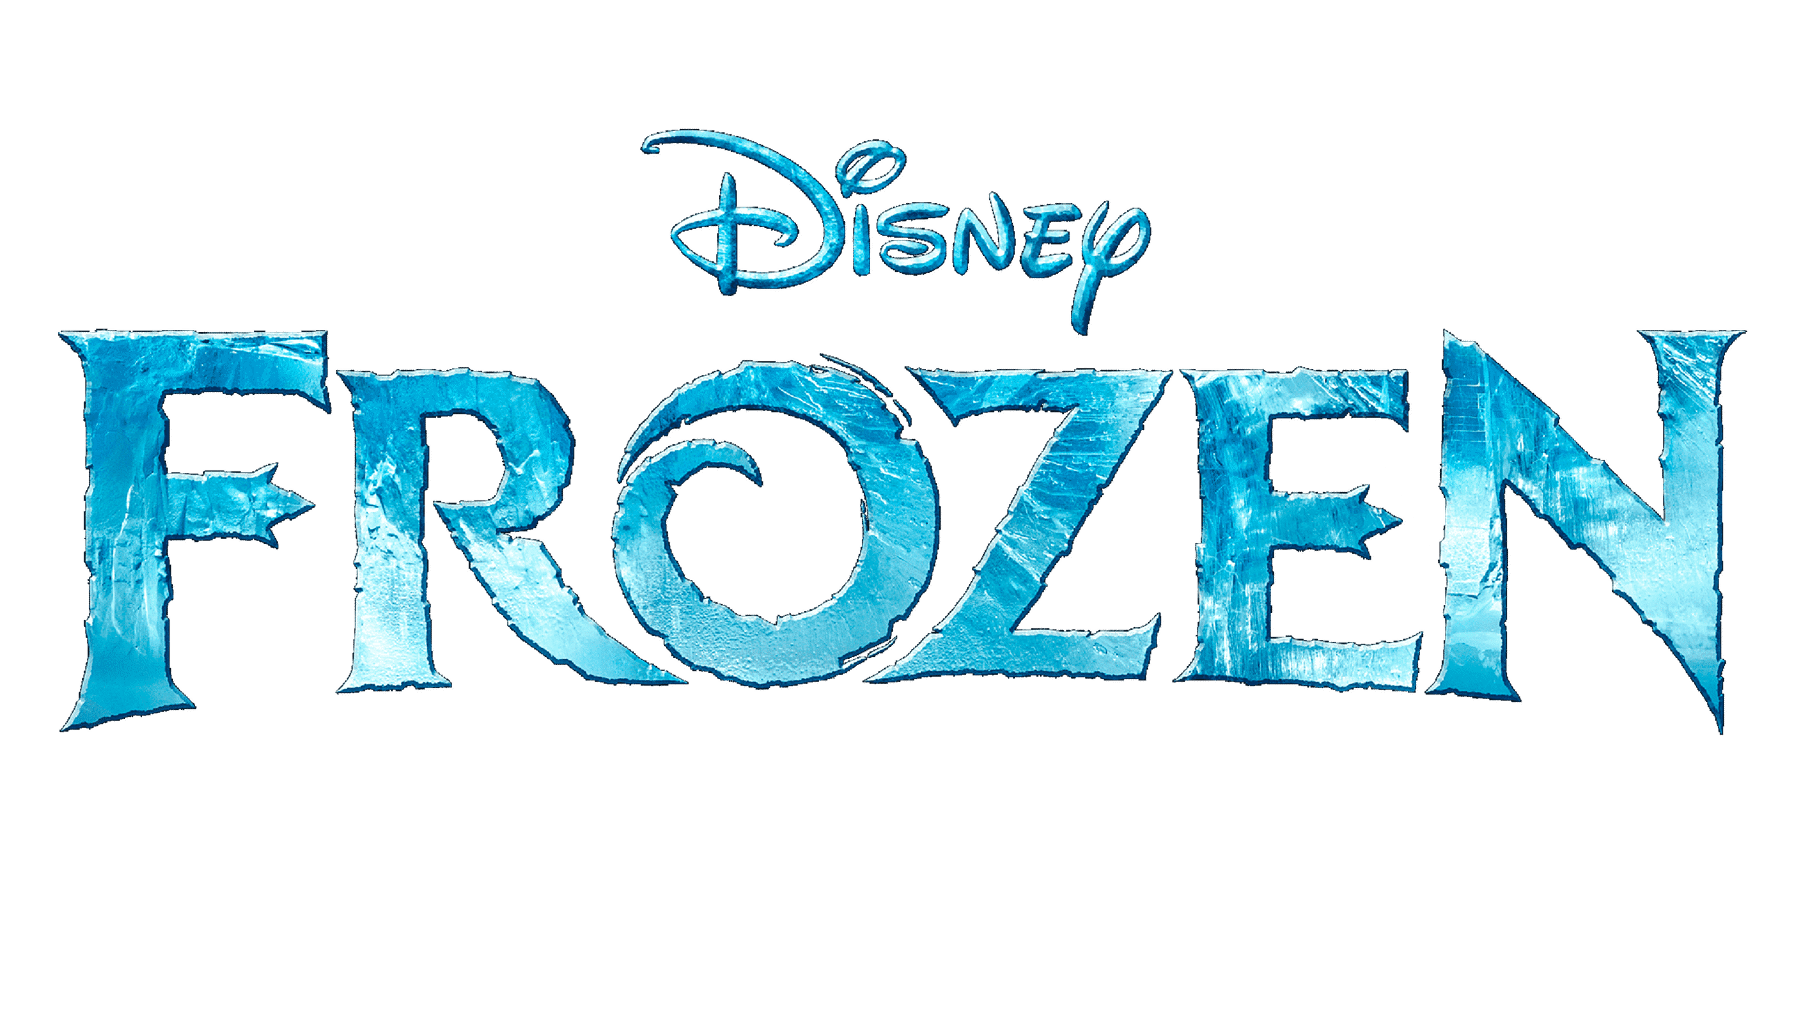 Frozen logo